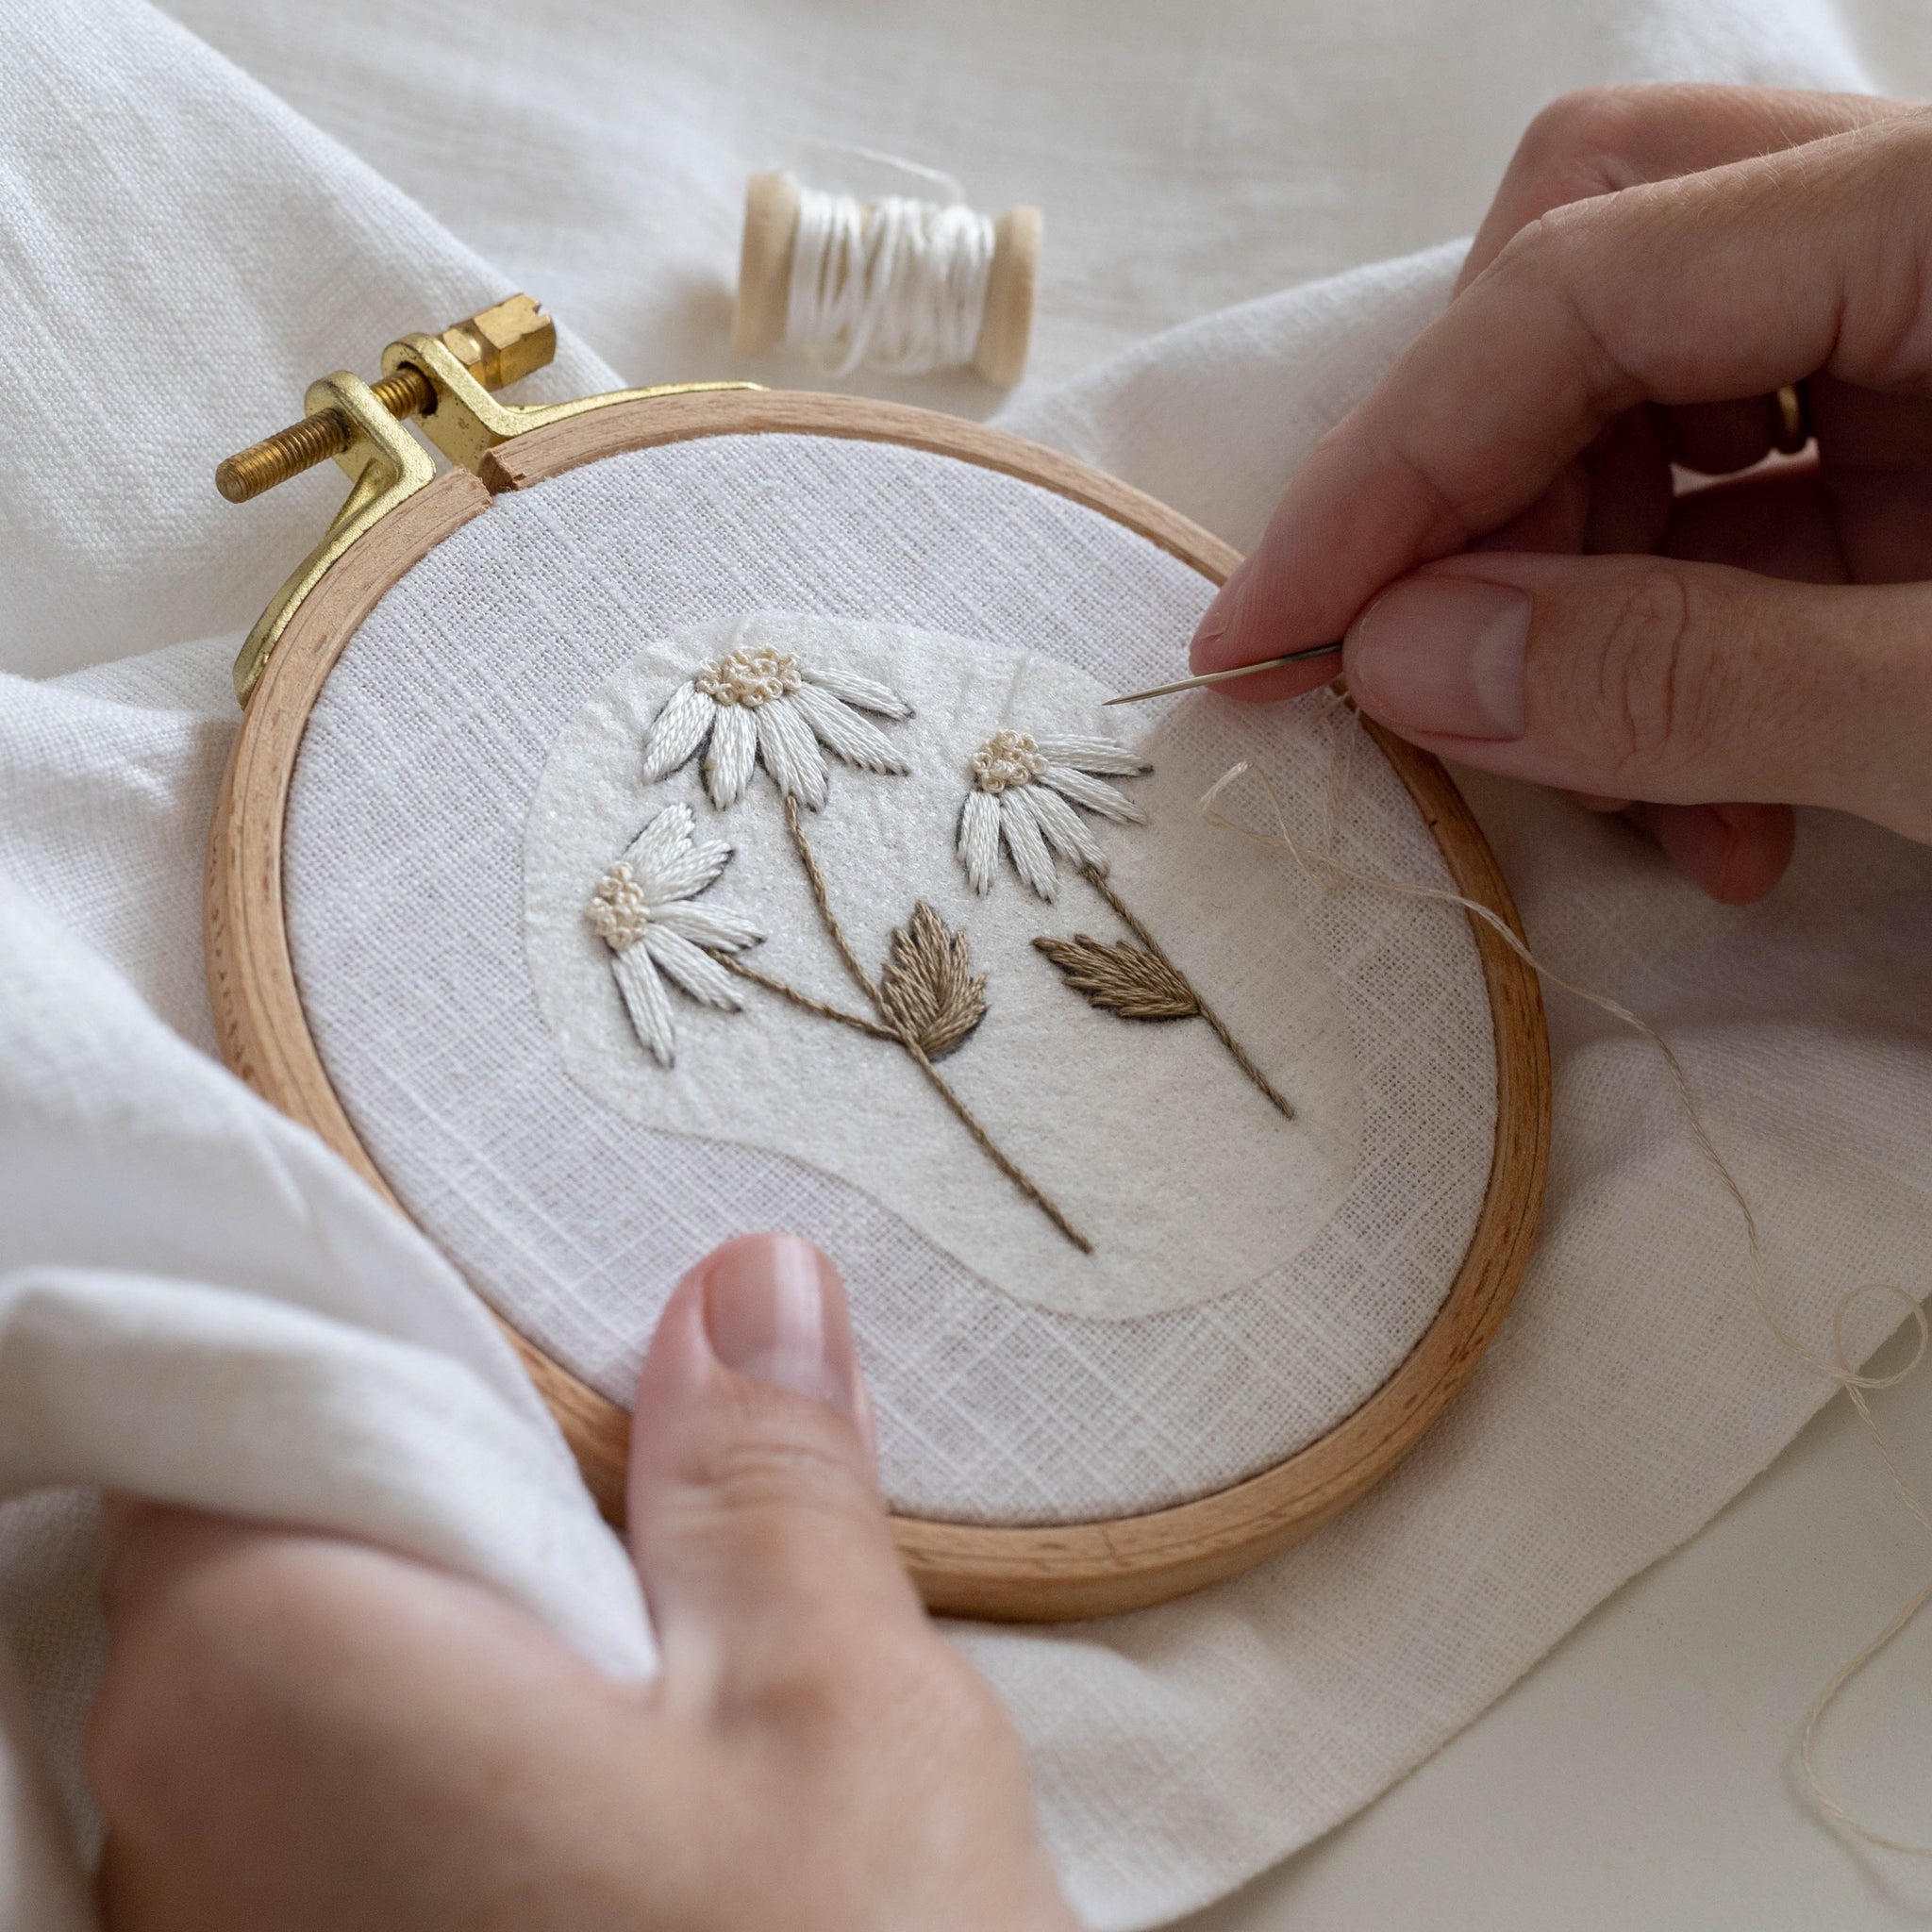 Botanical embroidery patterns, set of 5 – whynotstitching